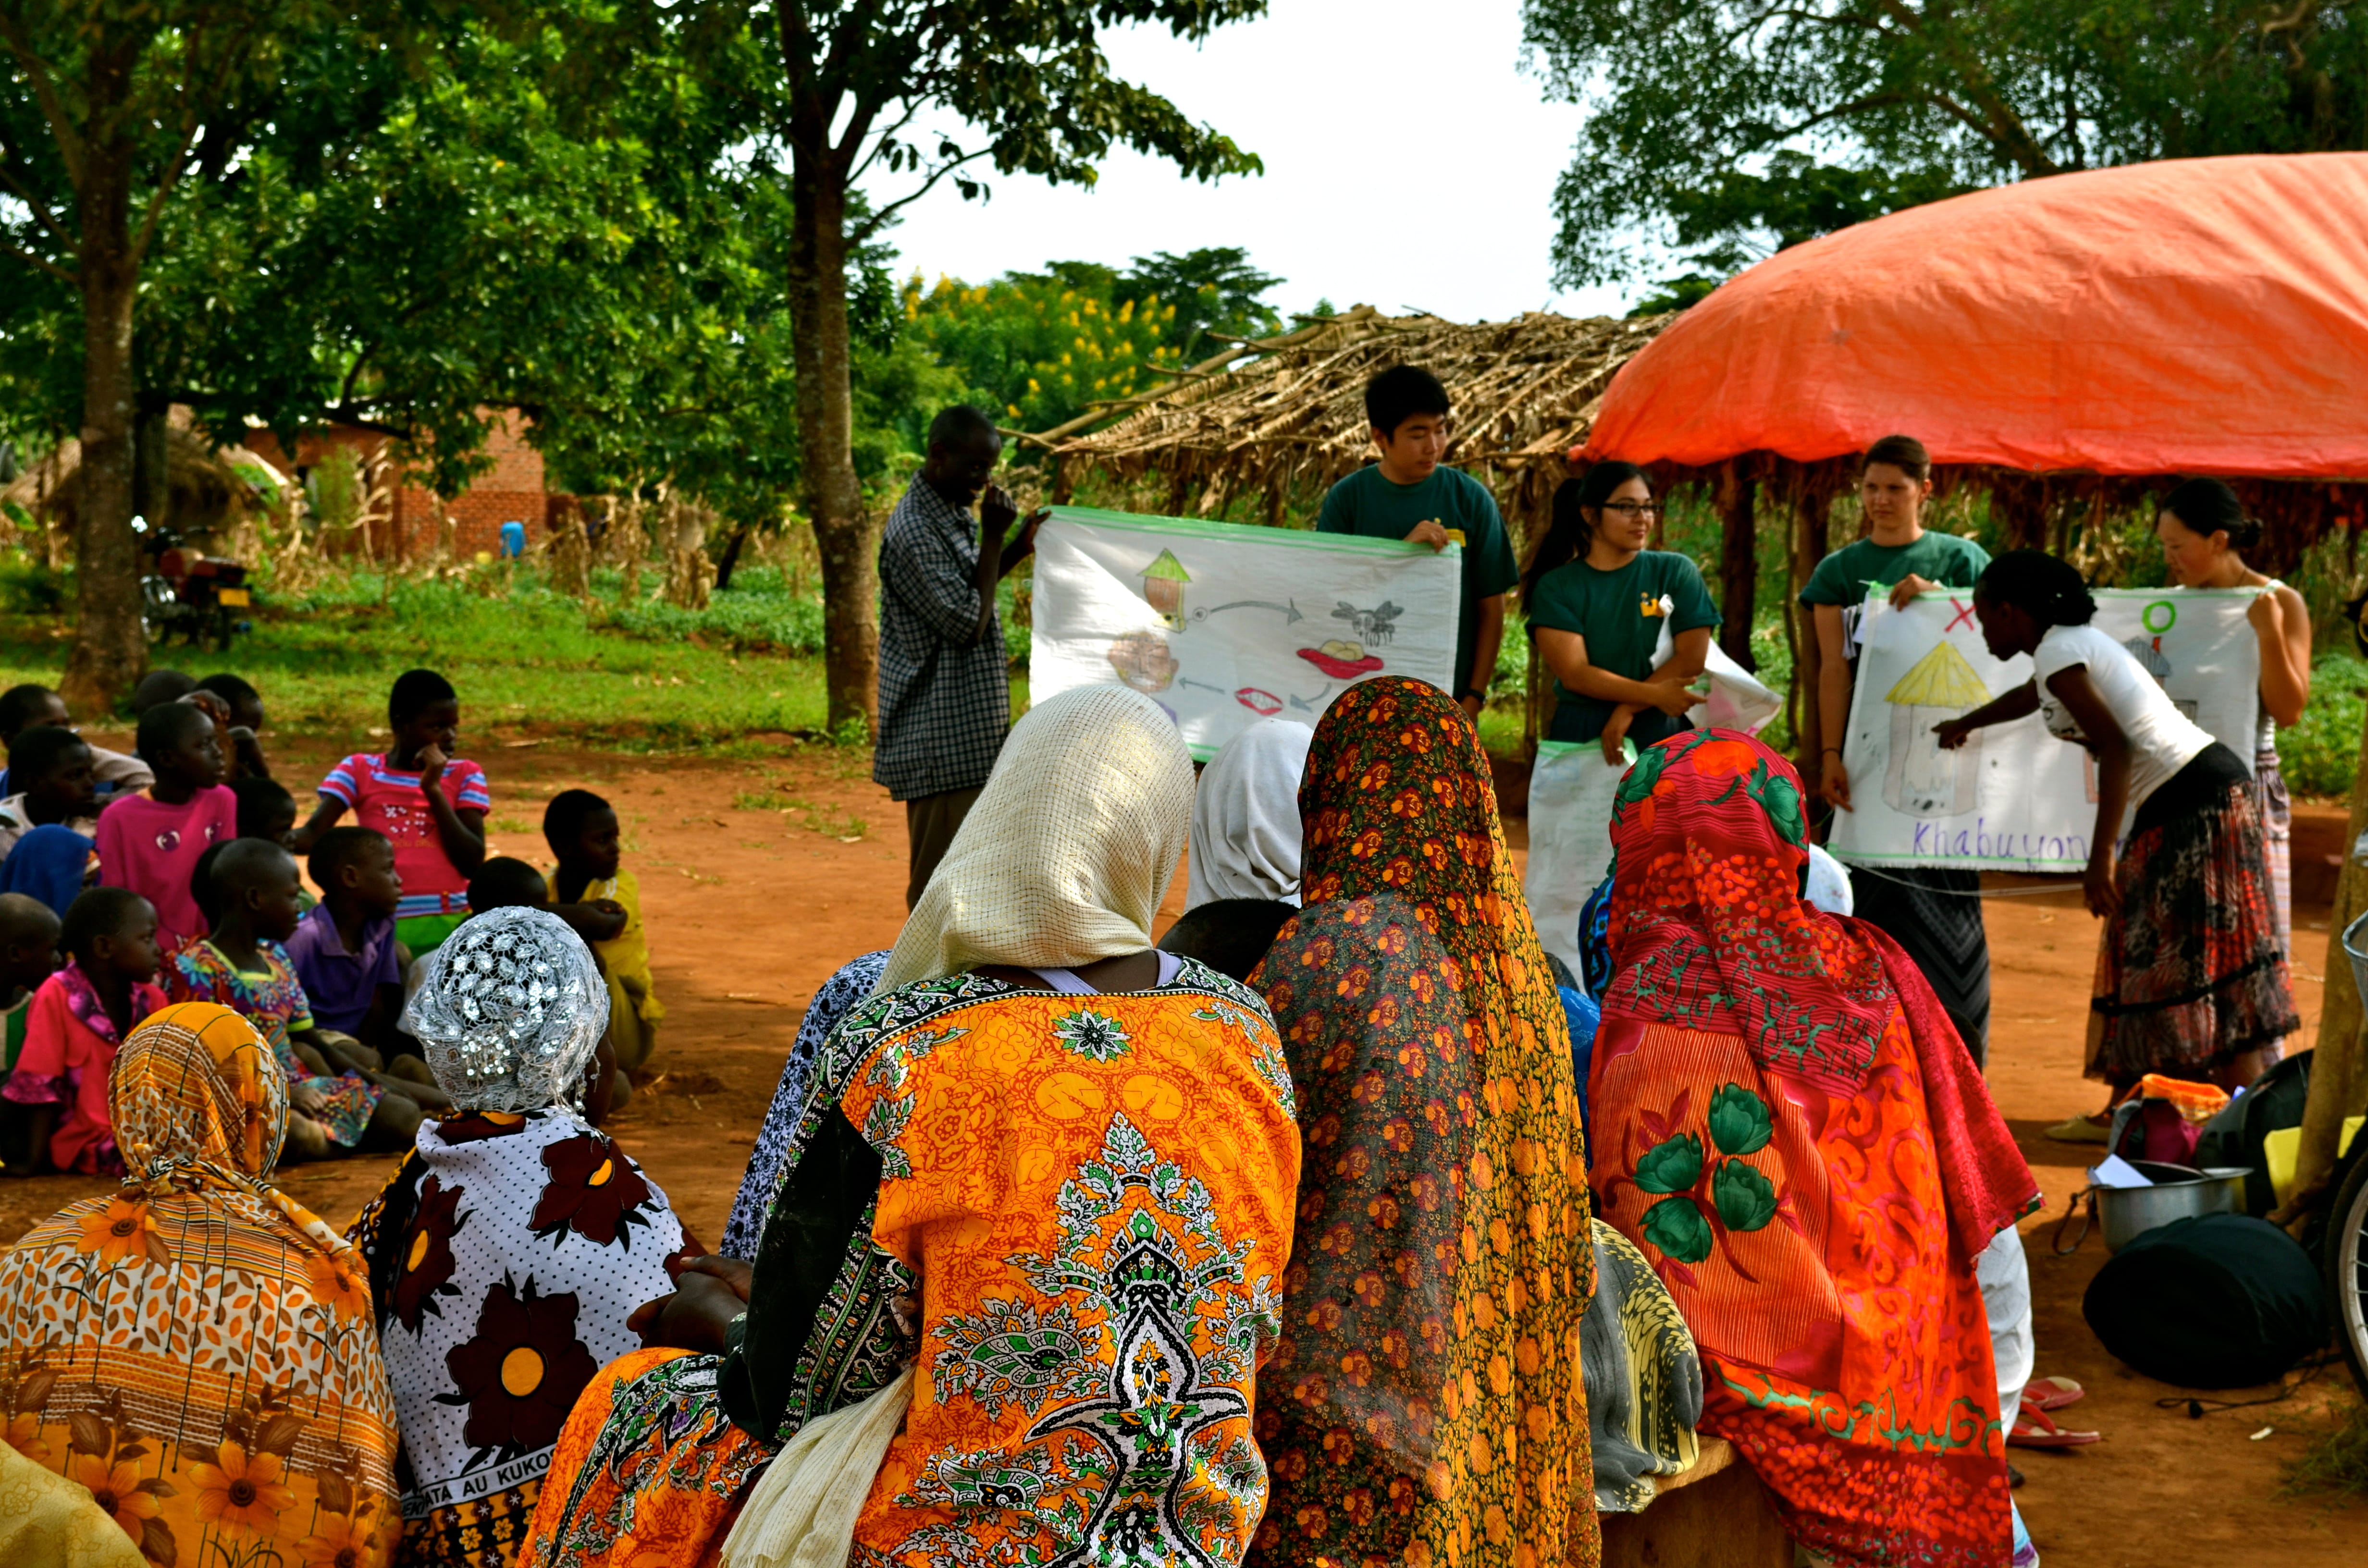 Tanzania community health outreach class